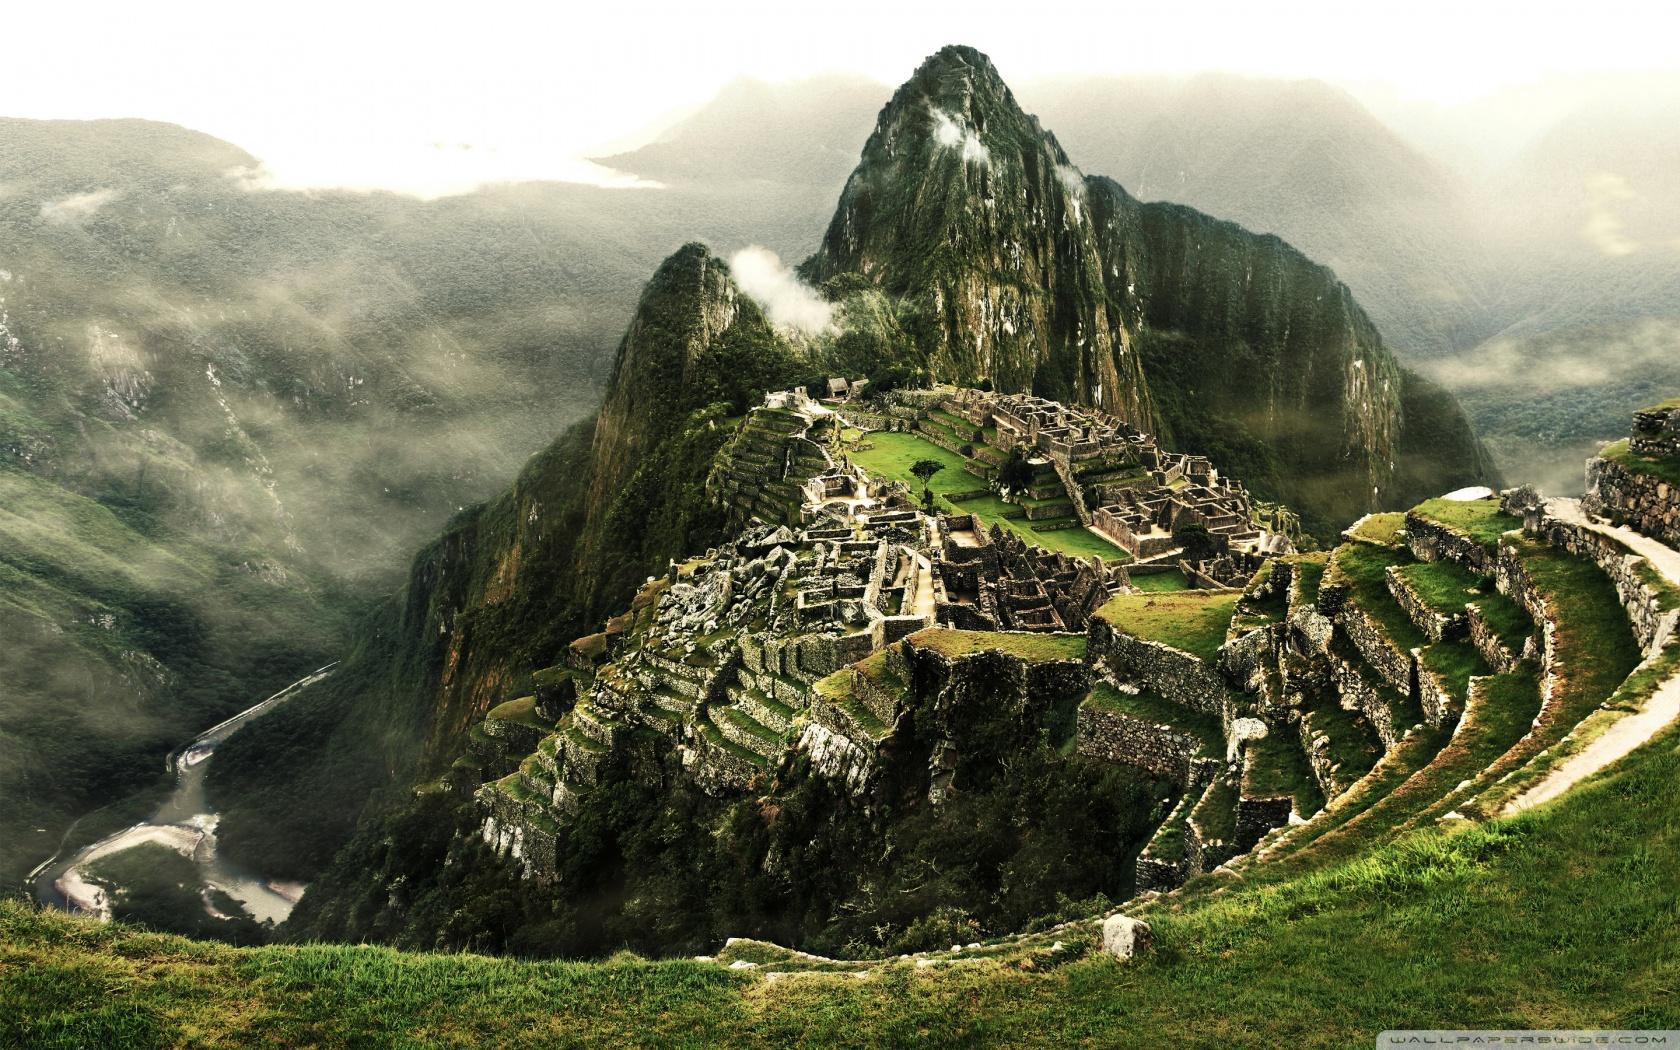 Machu Picchu Lost City Of The Incas ❤ 4K HD Desktop Wallpapers for